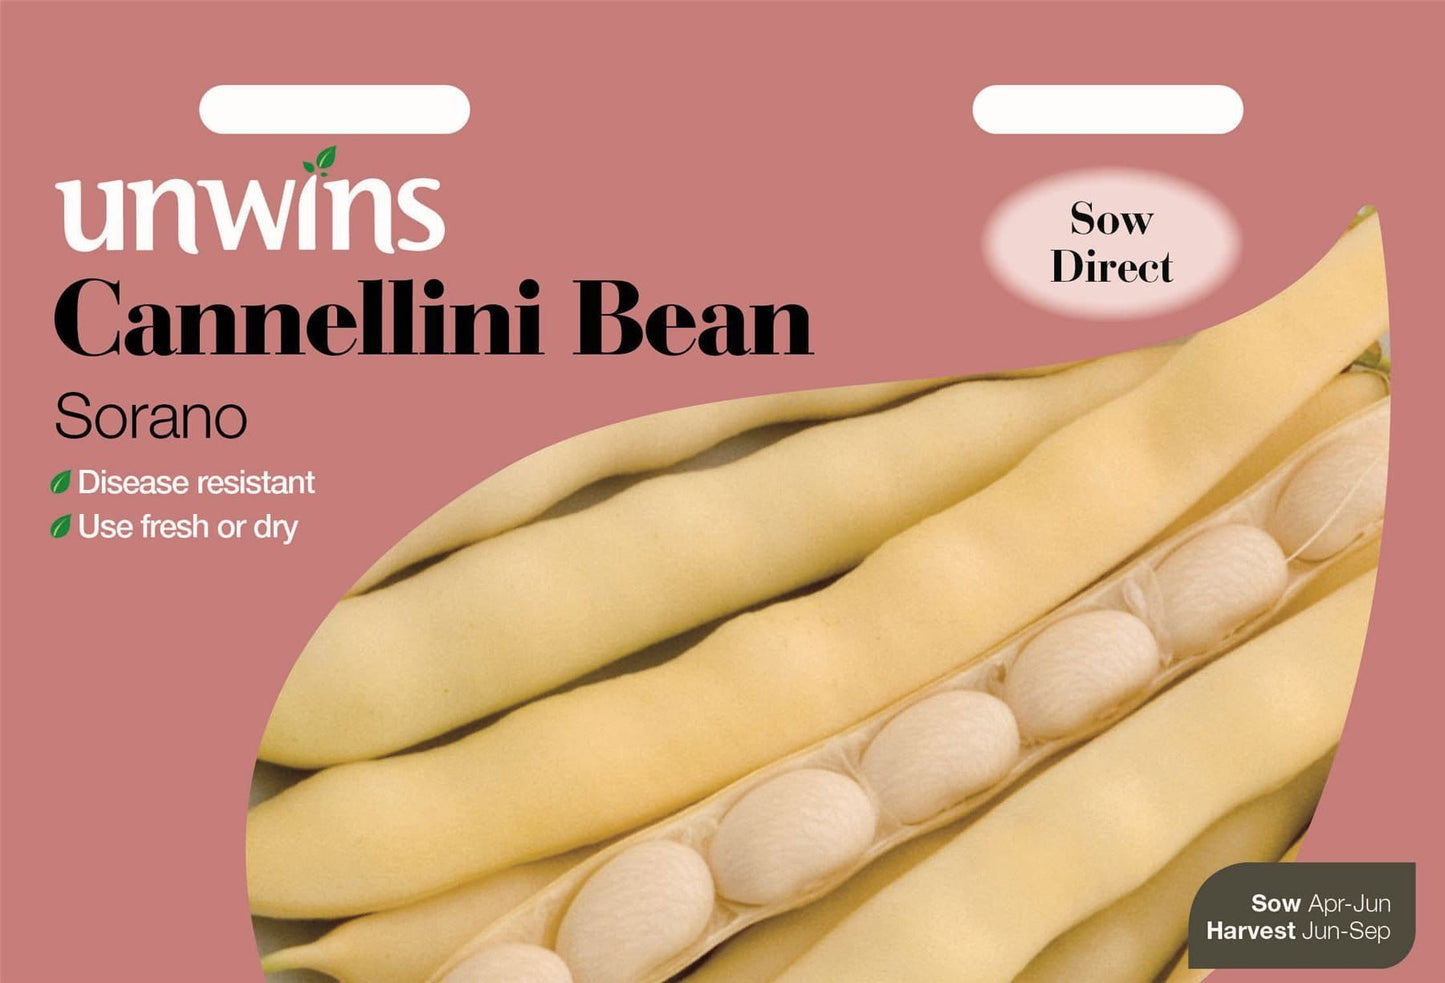 Unwins Cannellini Bean Sorano 50 Seeds